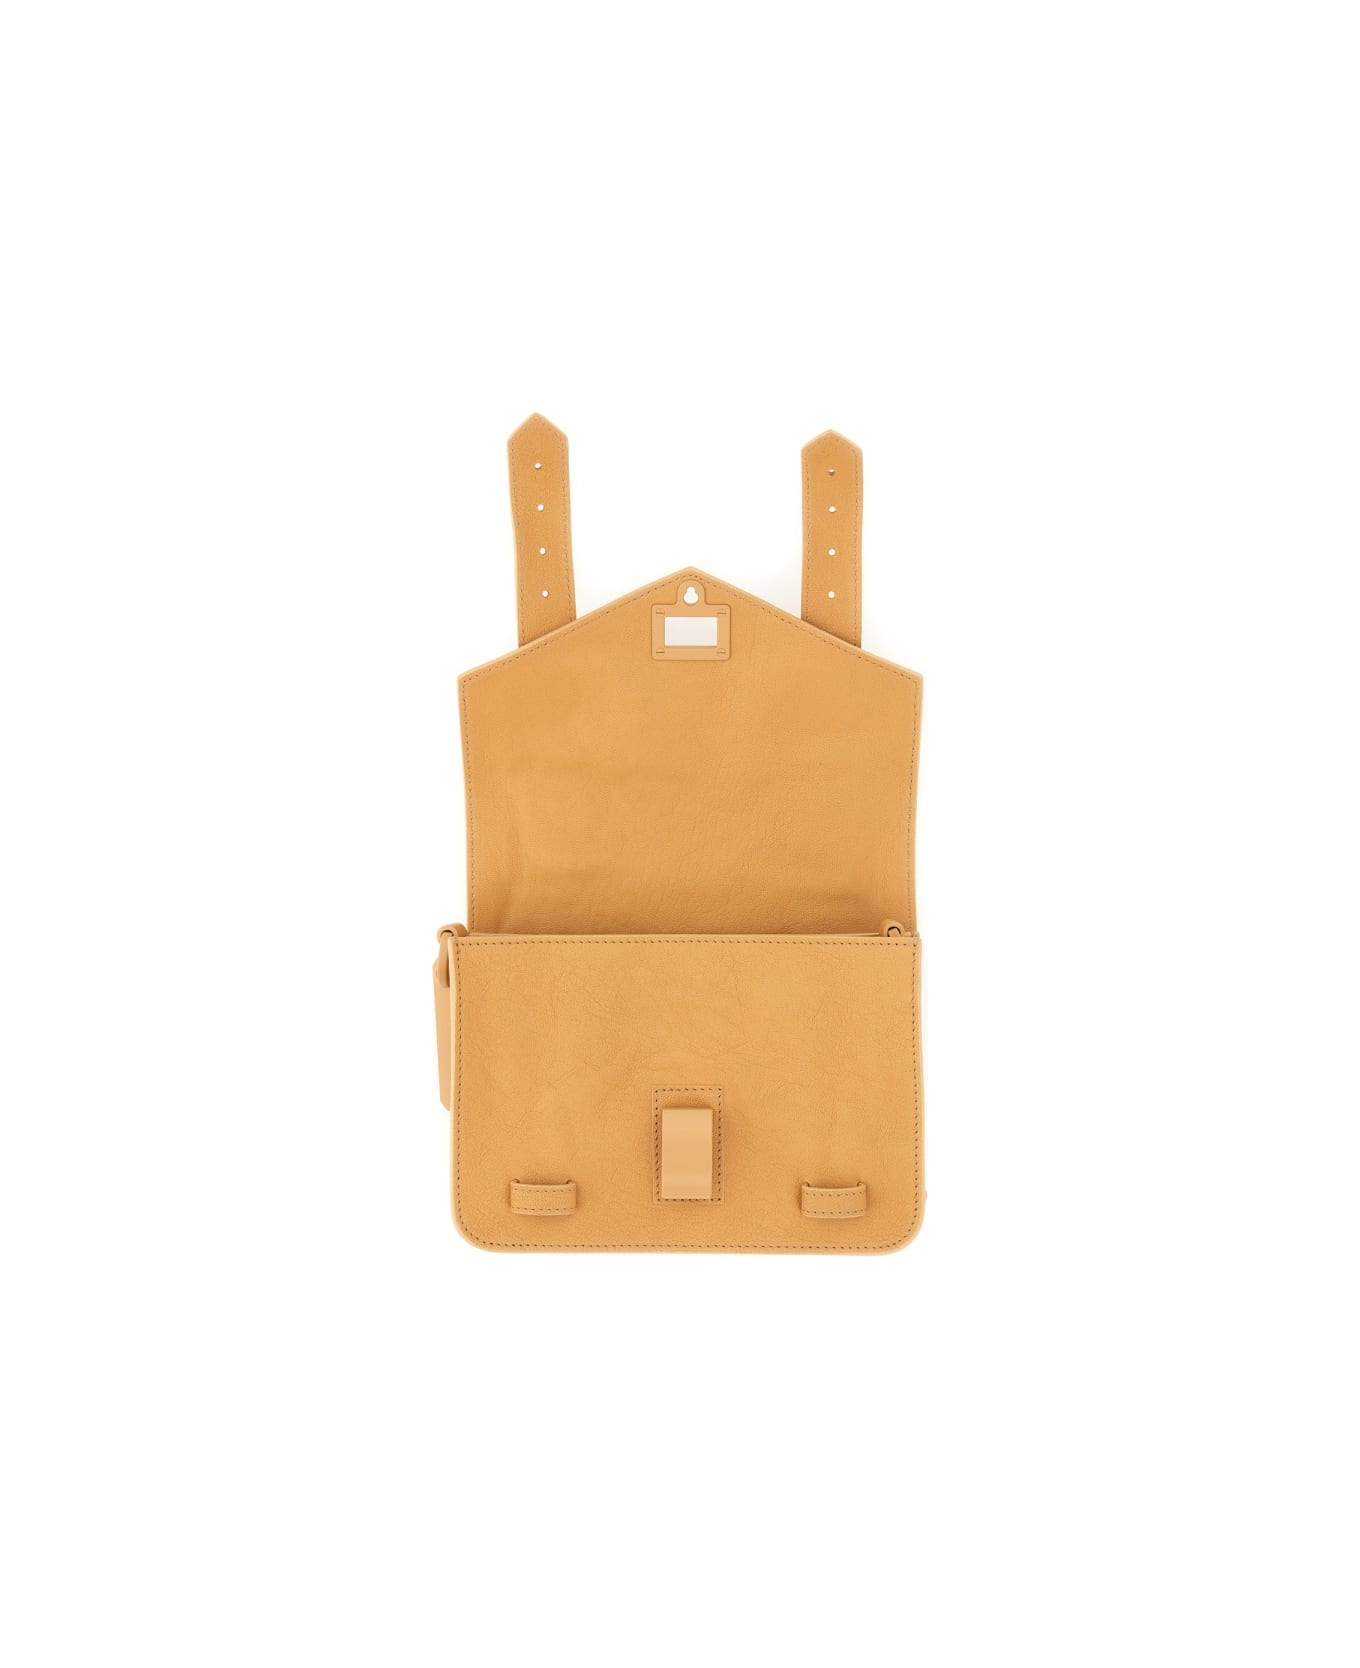 Proenza Schouler Ps1 Mini Shoulder Bag - BEIGE